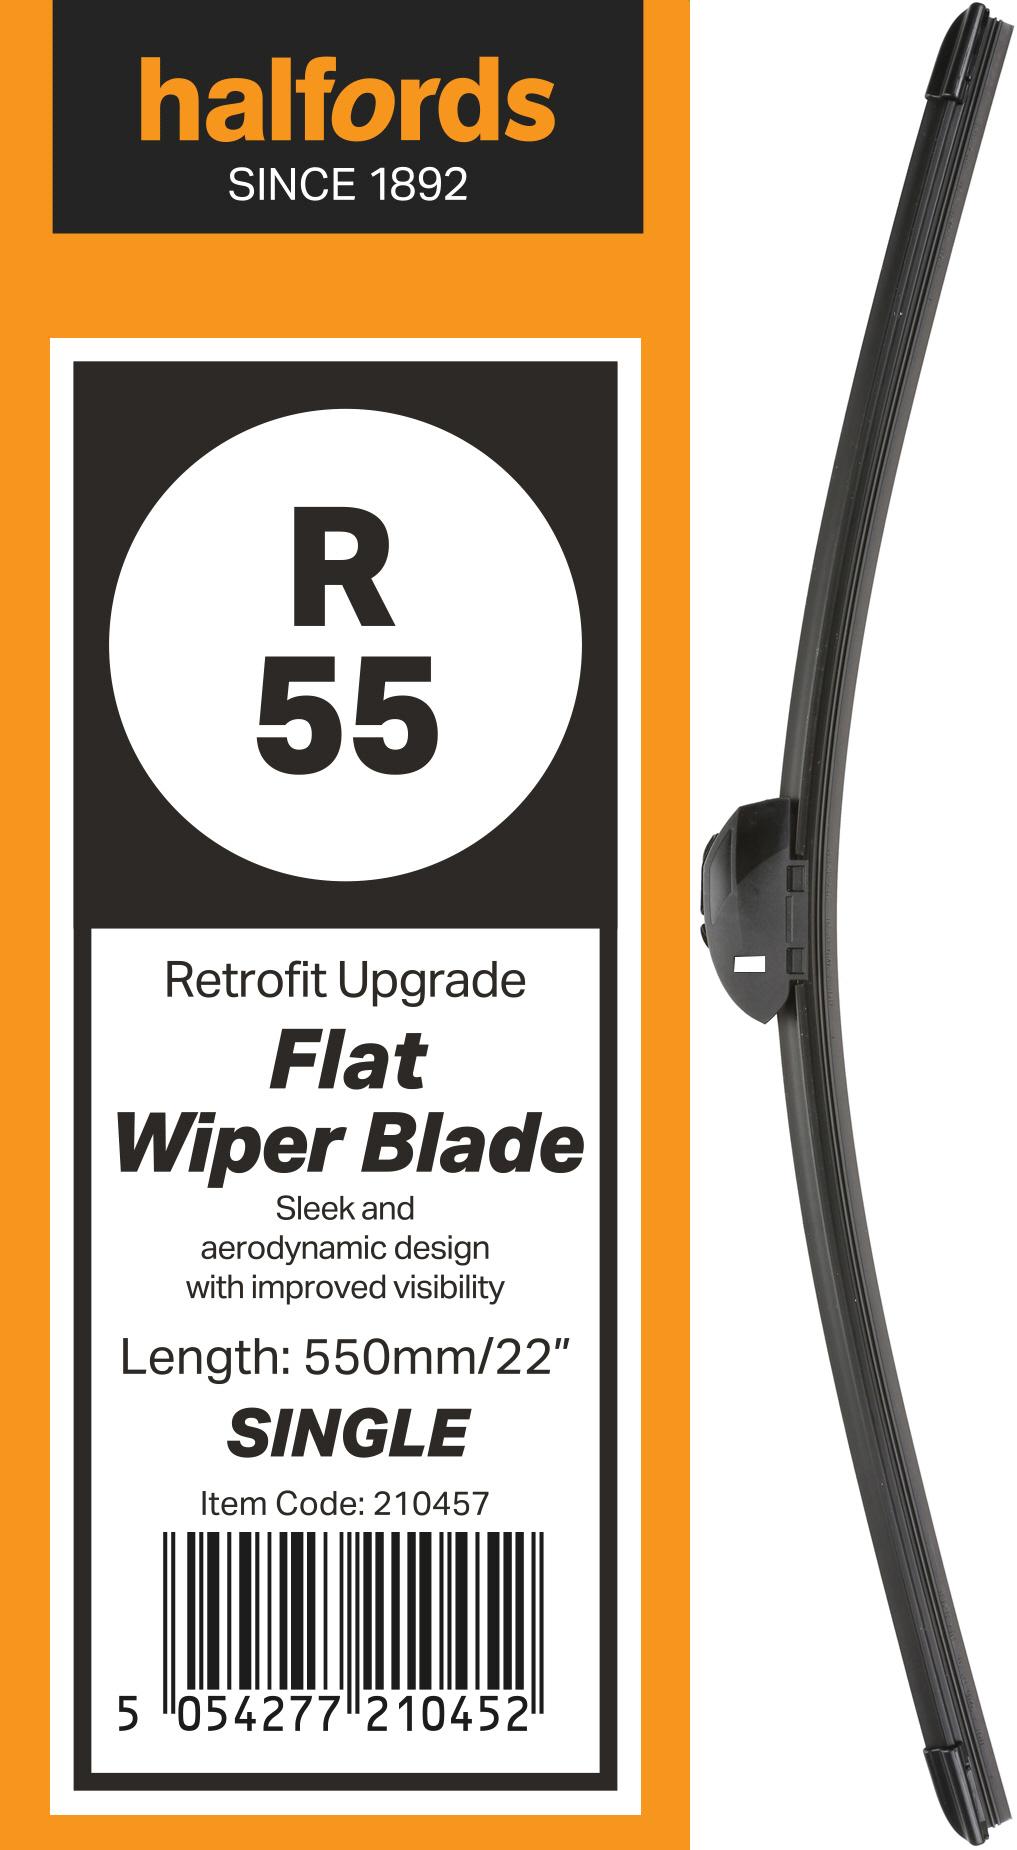 Halfords R55 Wiper Blade - Flat Upgrade - Single